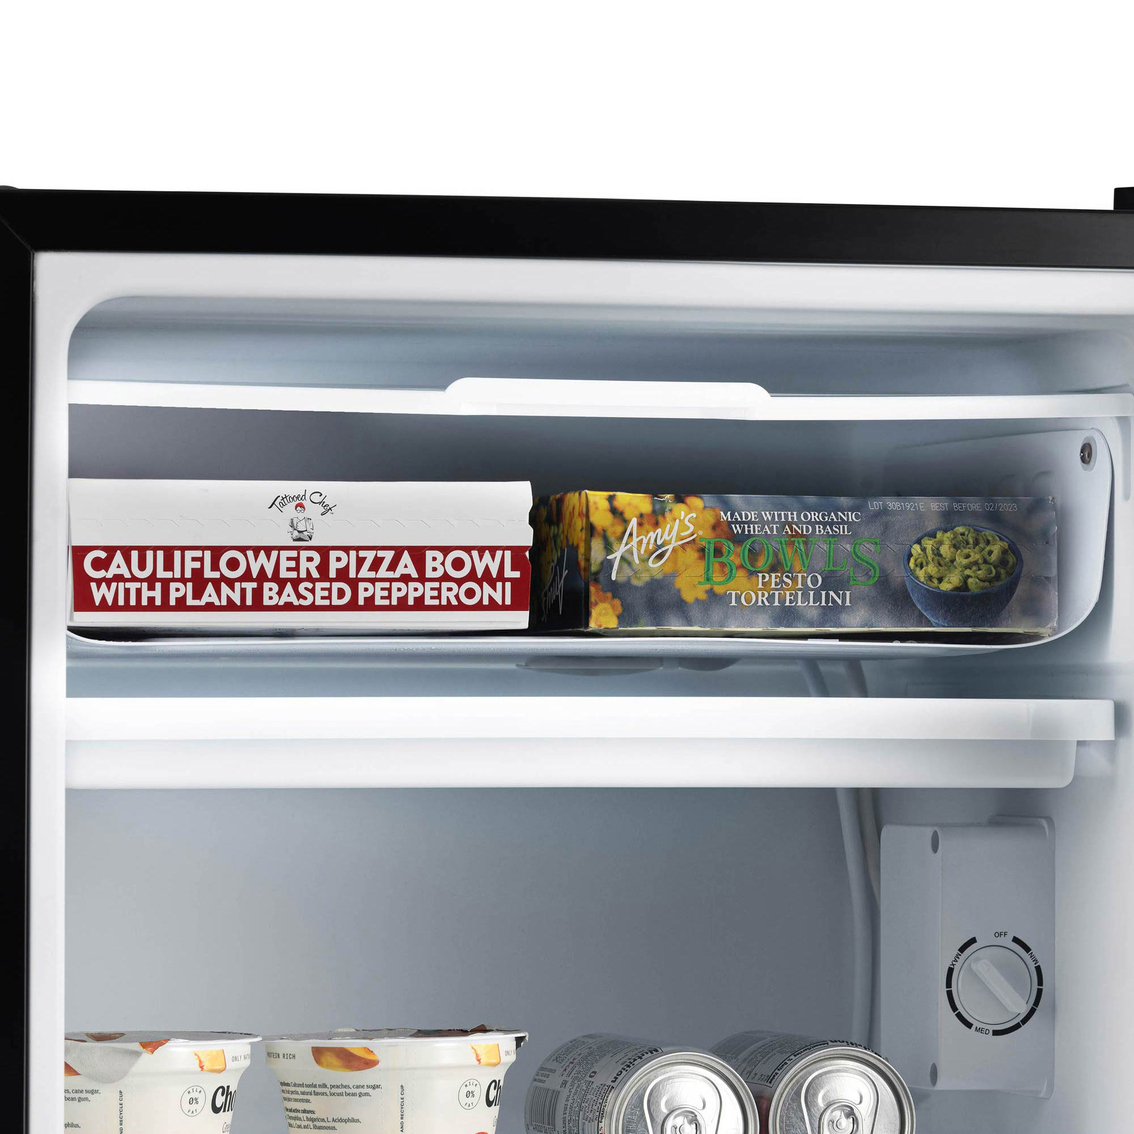 New Air Llc 3.3 Cu. Ft. Compact Mini Refrigerator With Freezer, Compact  Refrigerators, Furniture & Appliances